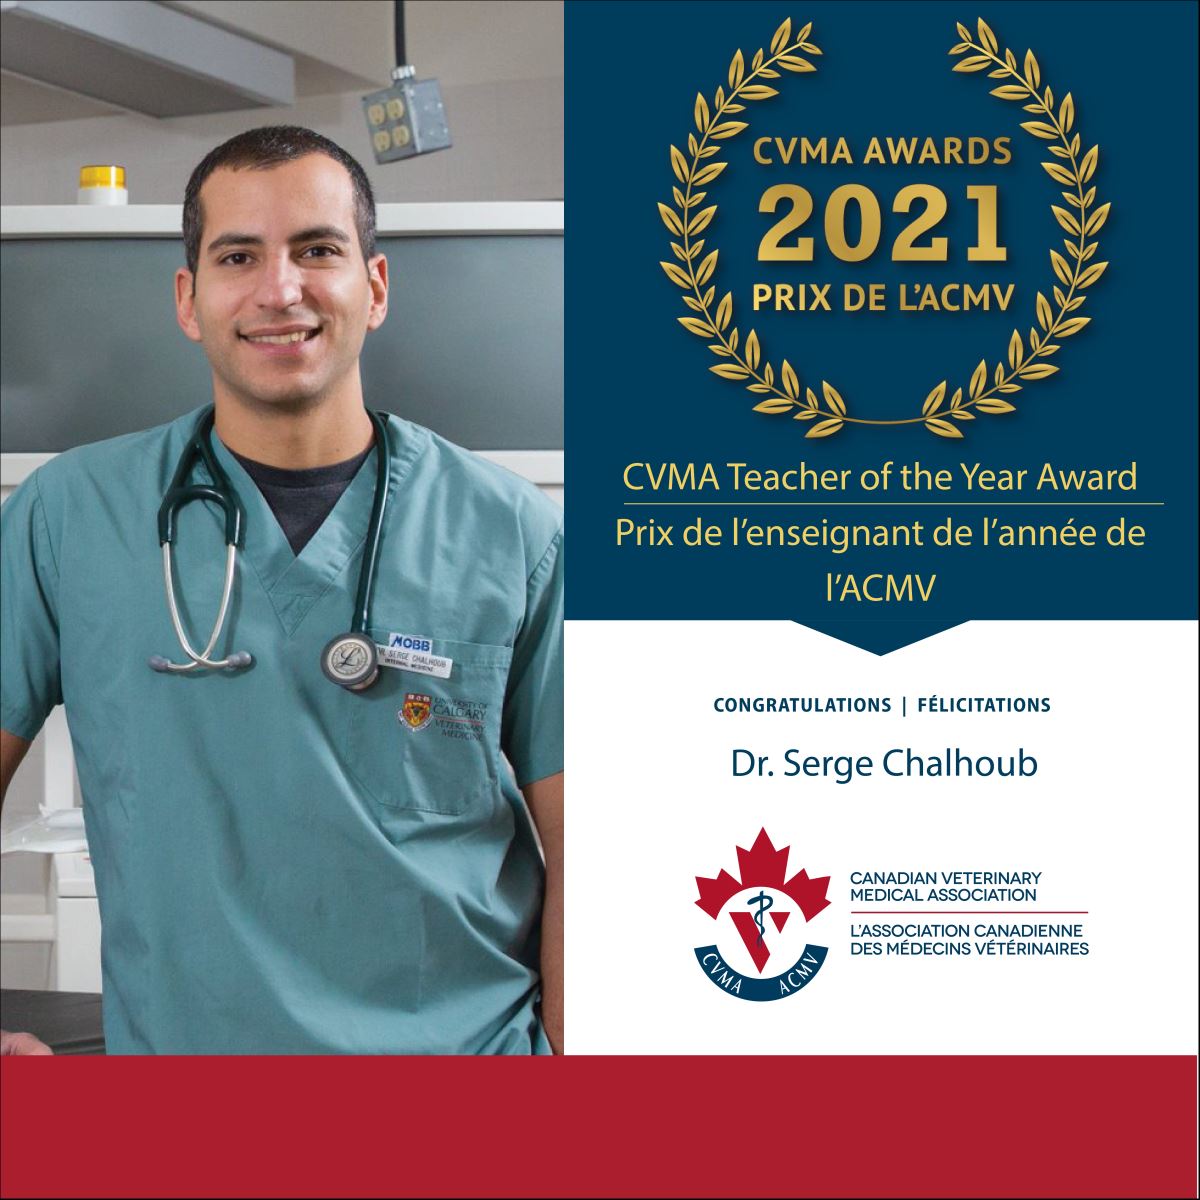 Dr. Serge Chalhoub